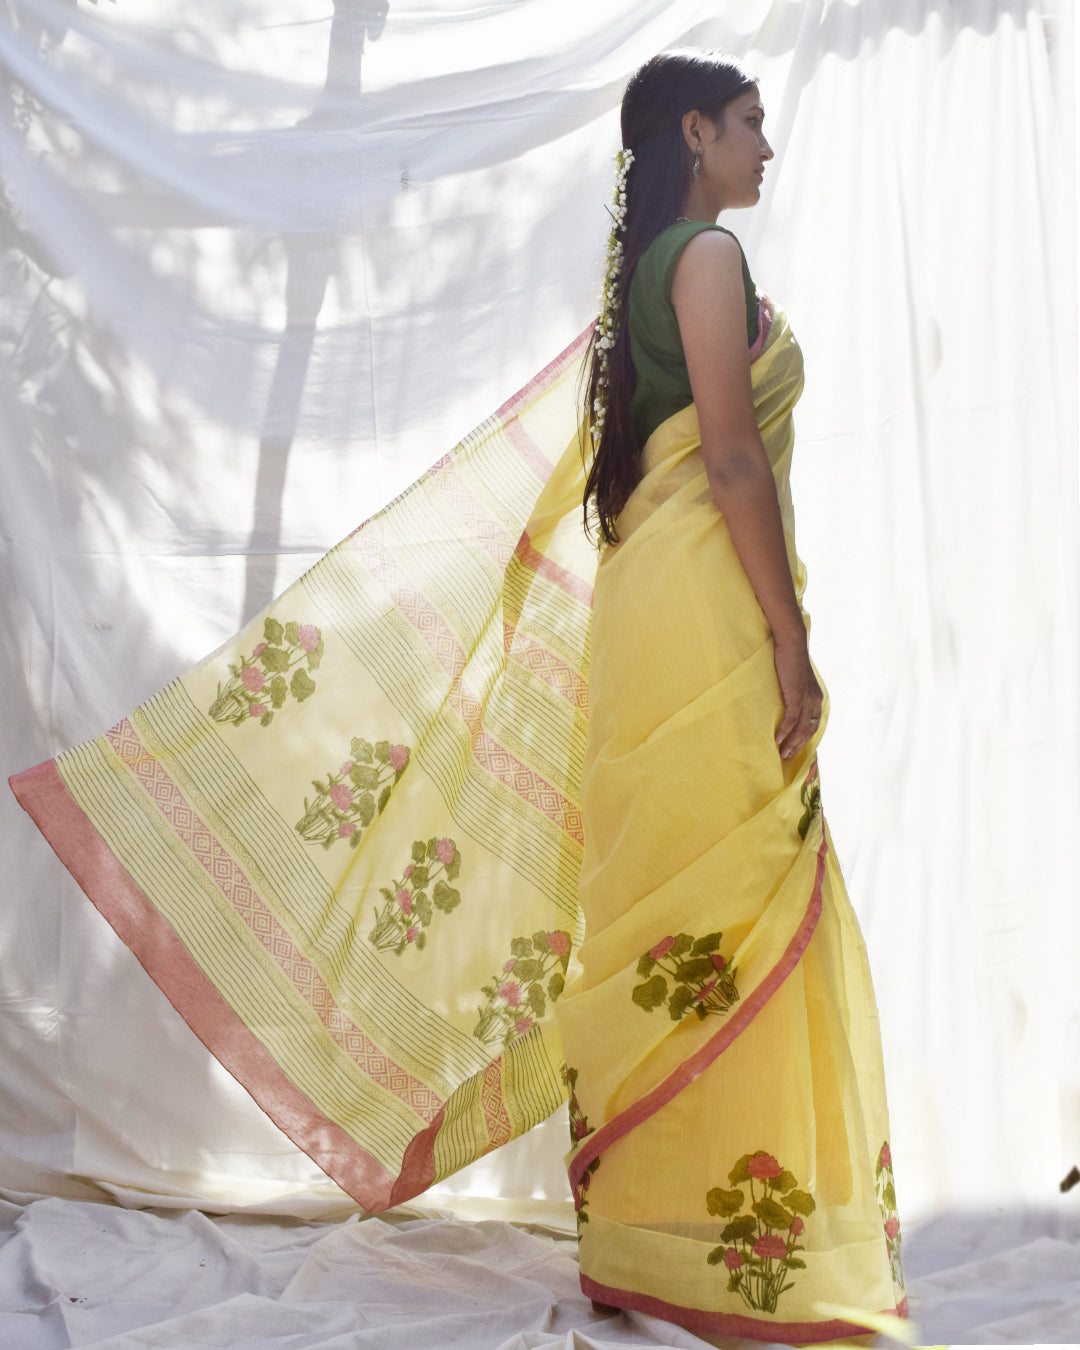 Kaviya Under The Sun Chanderi Semi-sheer Block printed Saree